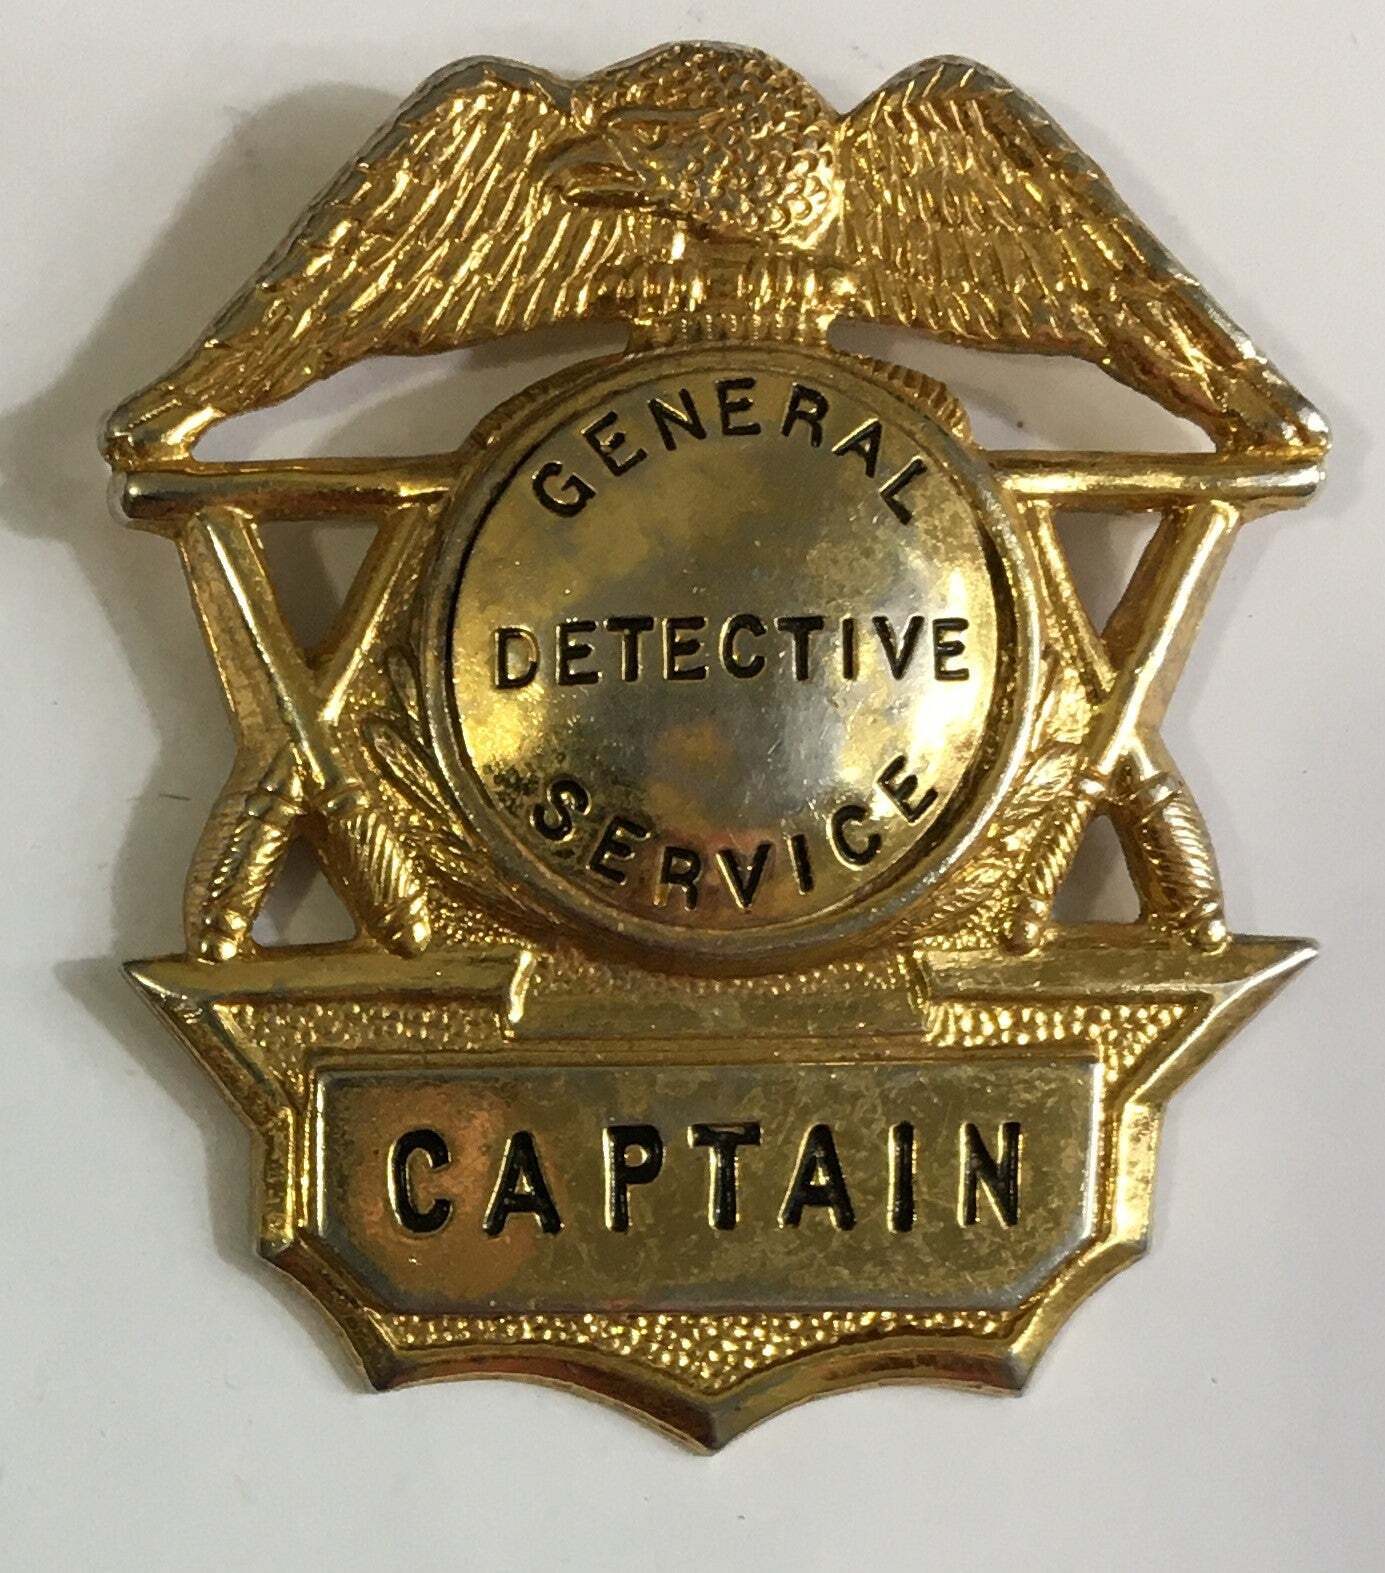 Vintage General Detective Service Badge - Captain - Gold Color  (1000633)